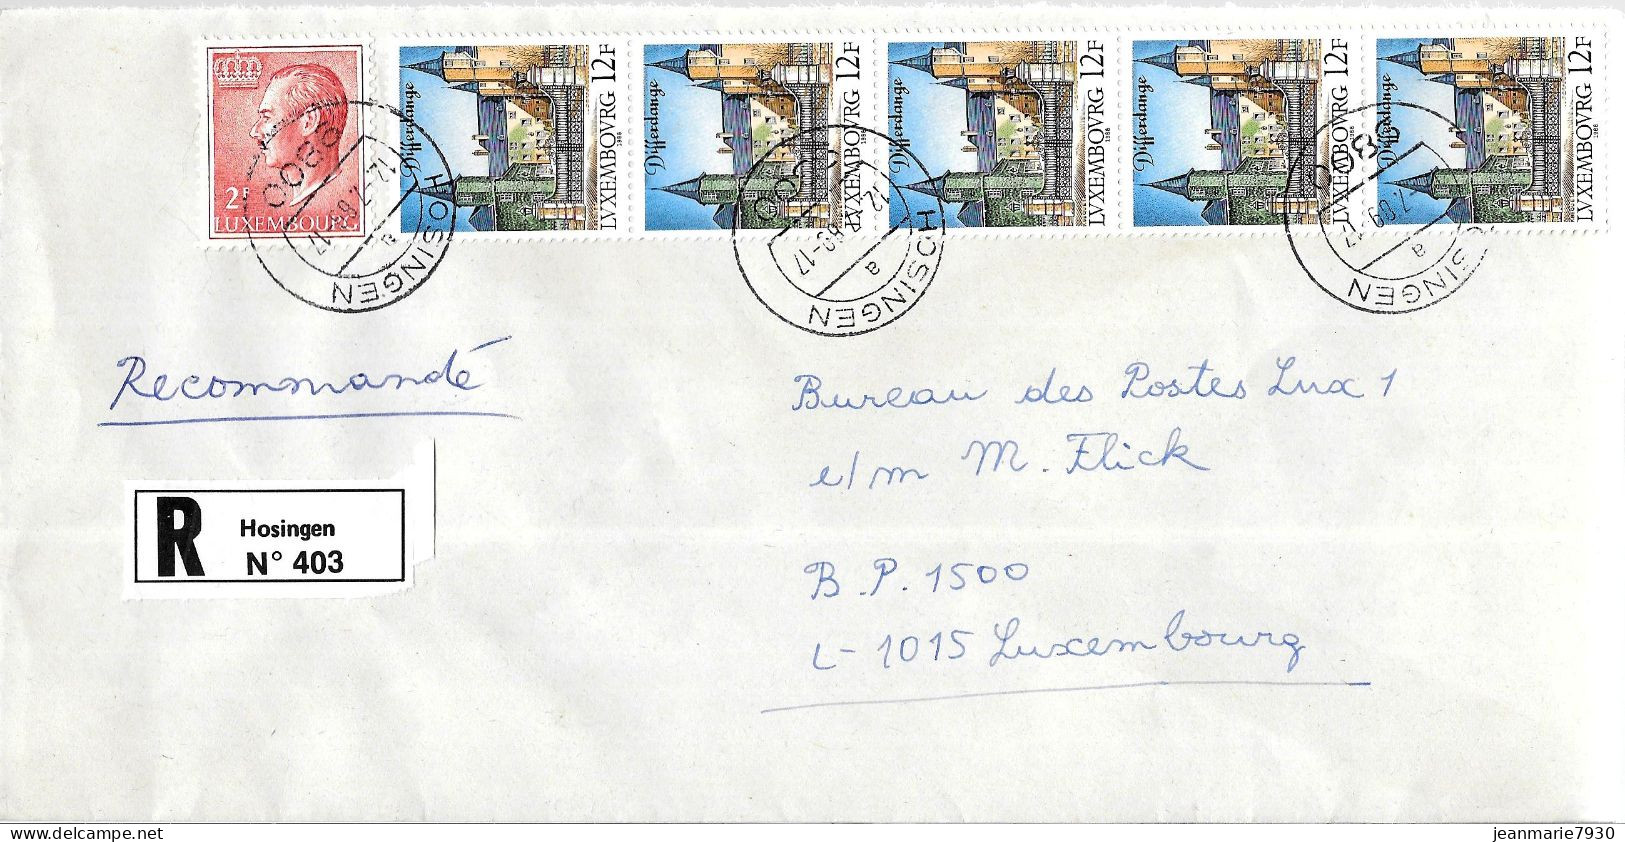 H382 - LETTRE RECOMMANDEE DE HOSINGEN DU 12/07/89 - Briefe U. Dokumente